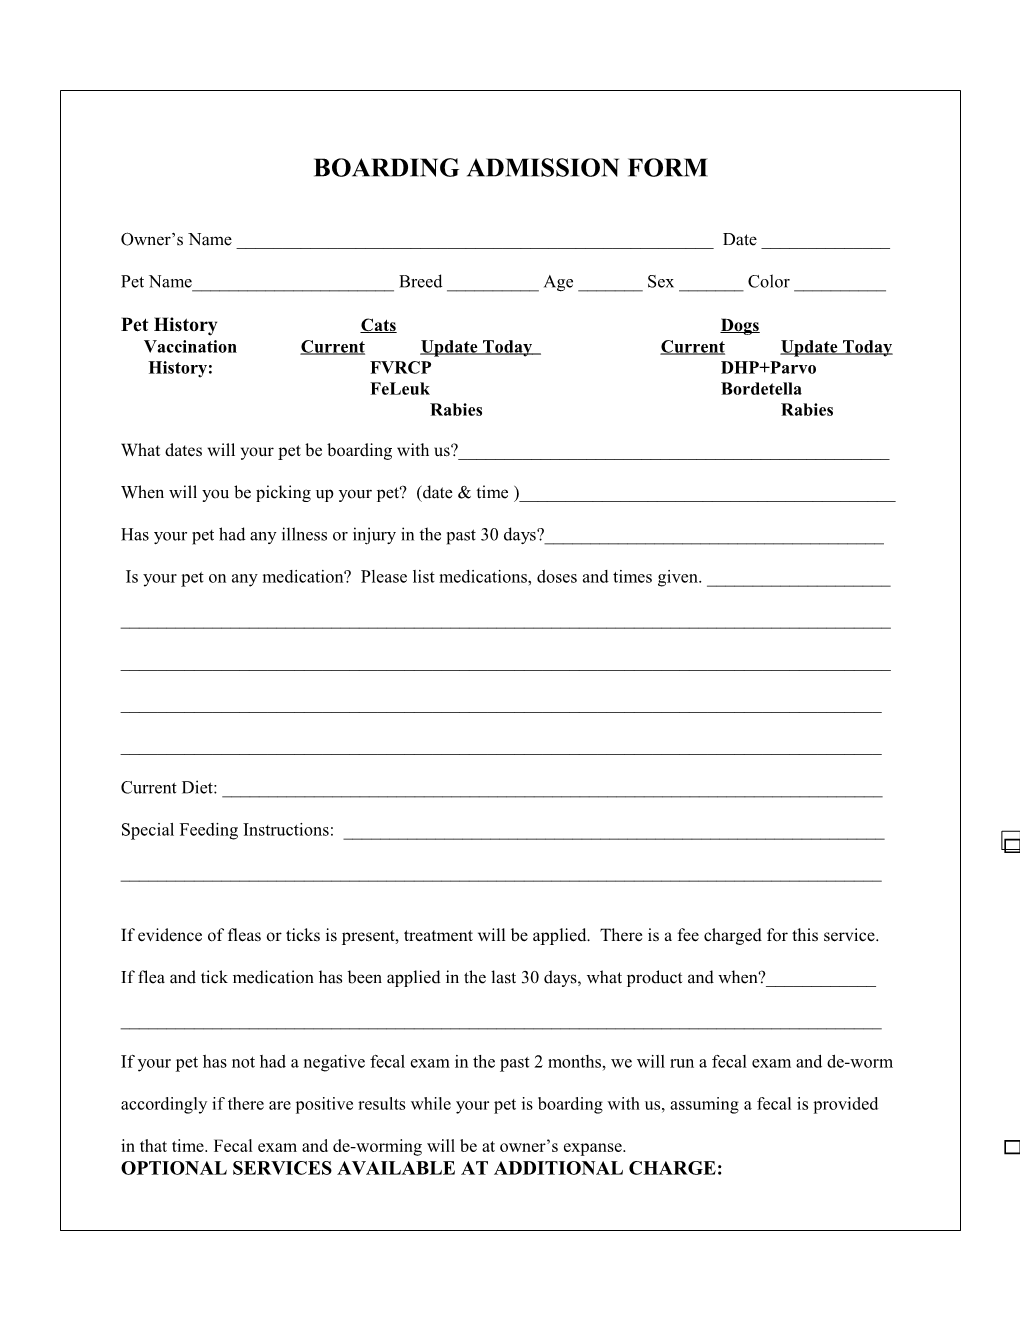 Boarding Admission Form